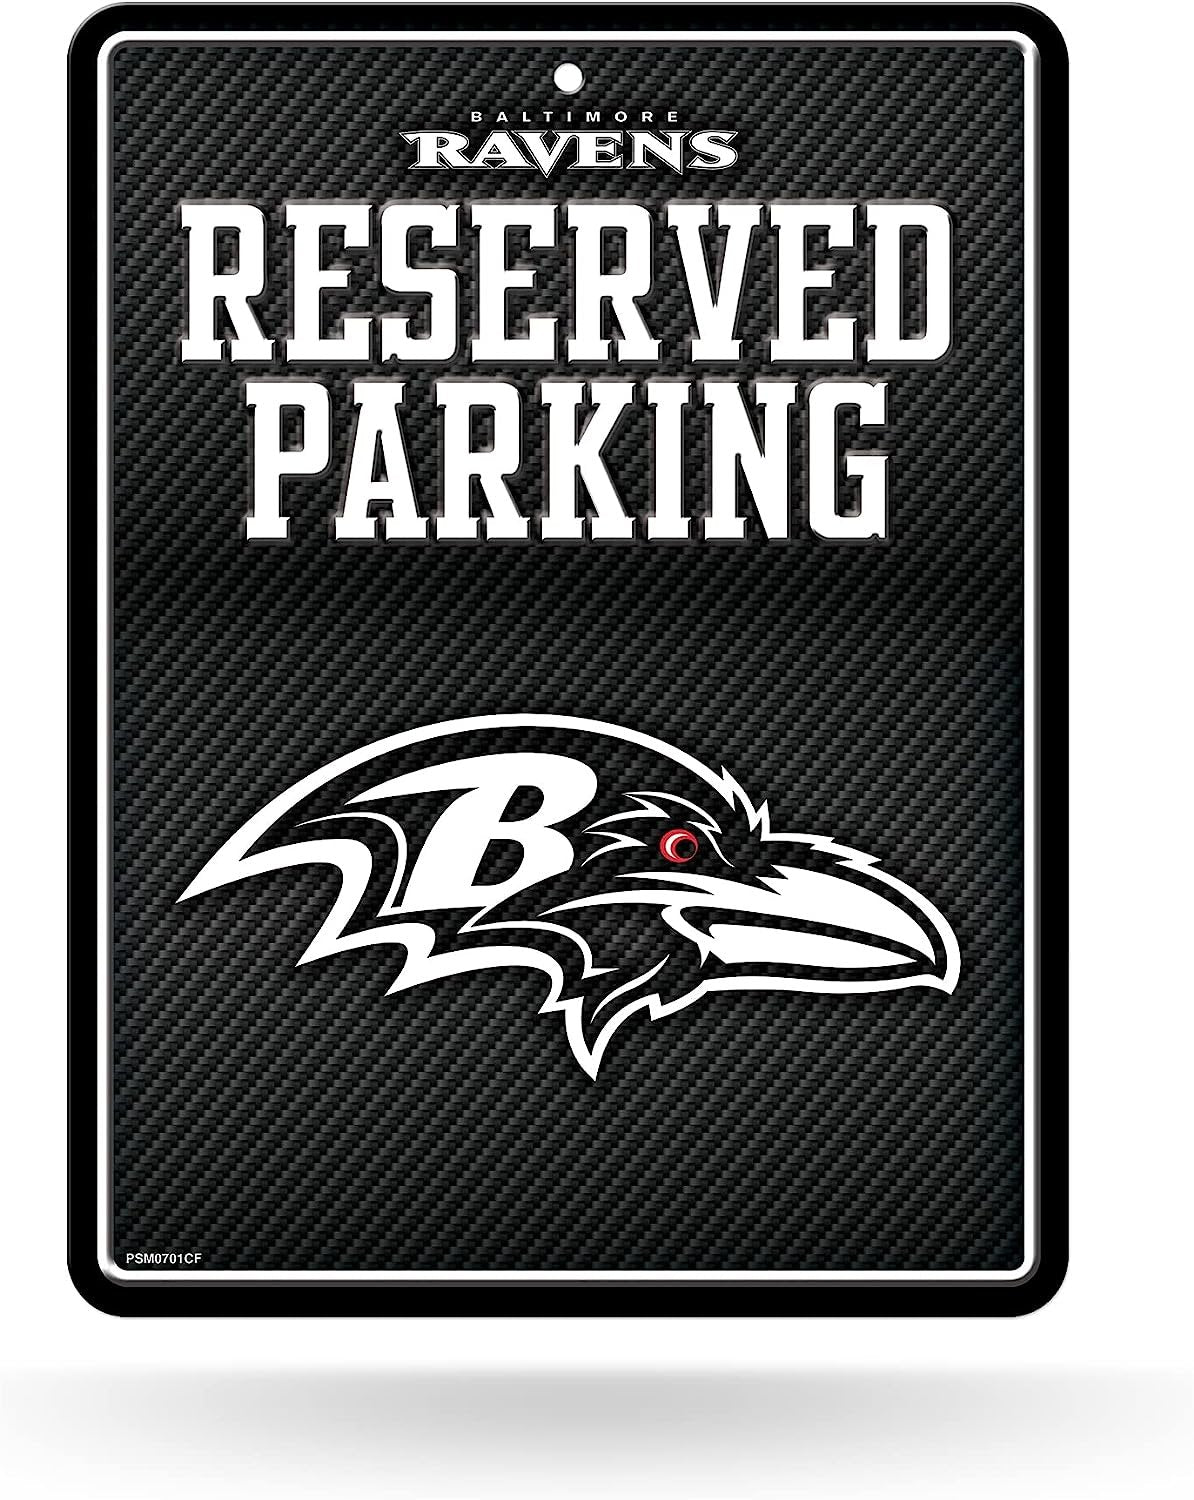 Baltimore Ravens Metal Parking Novelty Wall Sign 8.5 x 11 Inch Carbon Fiber Design